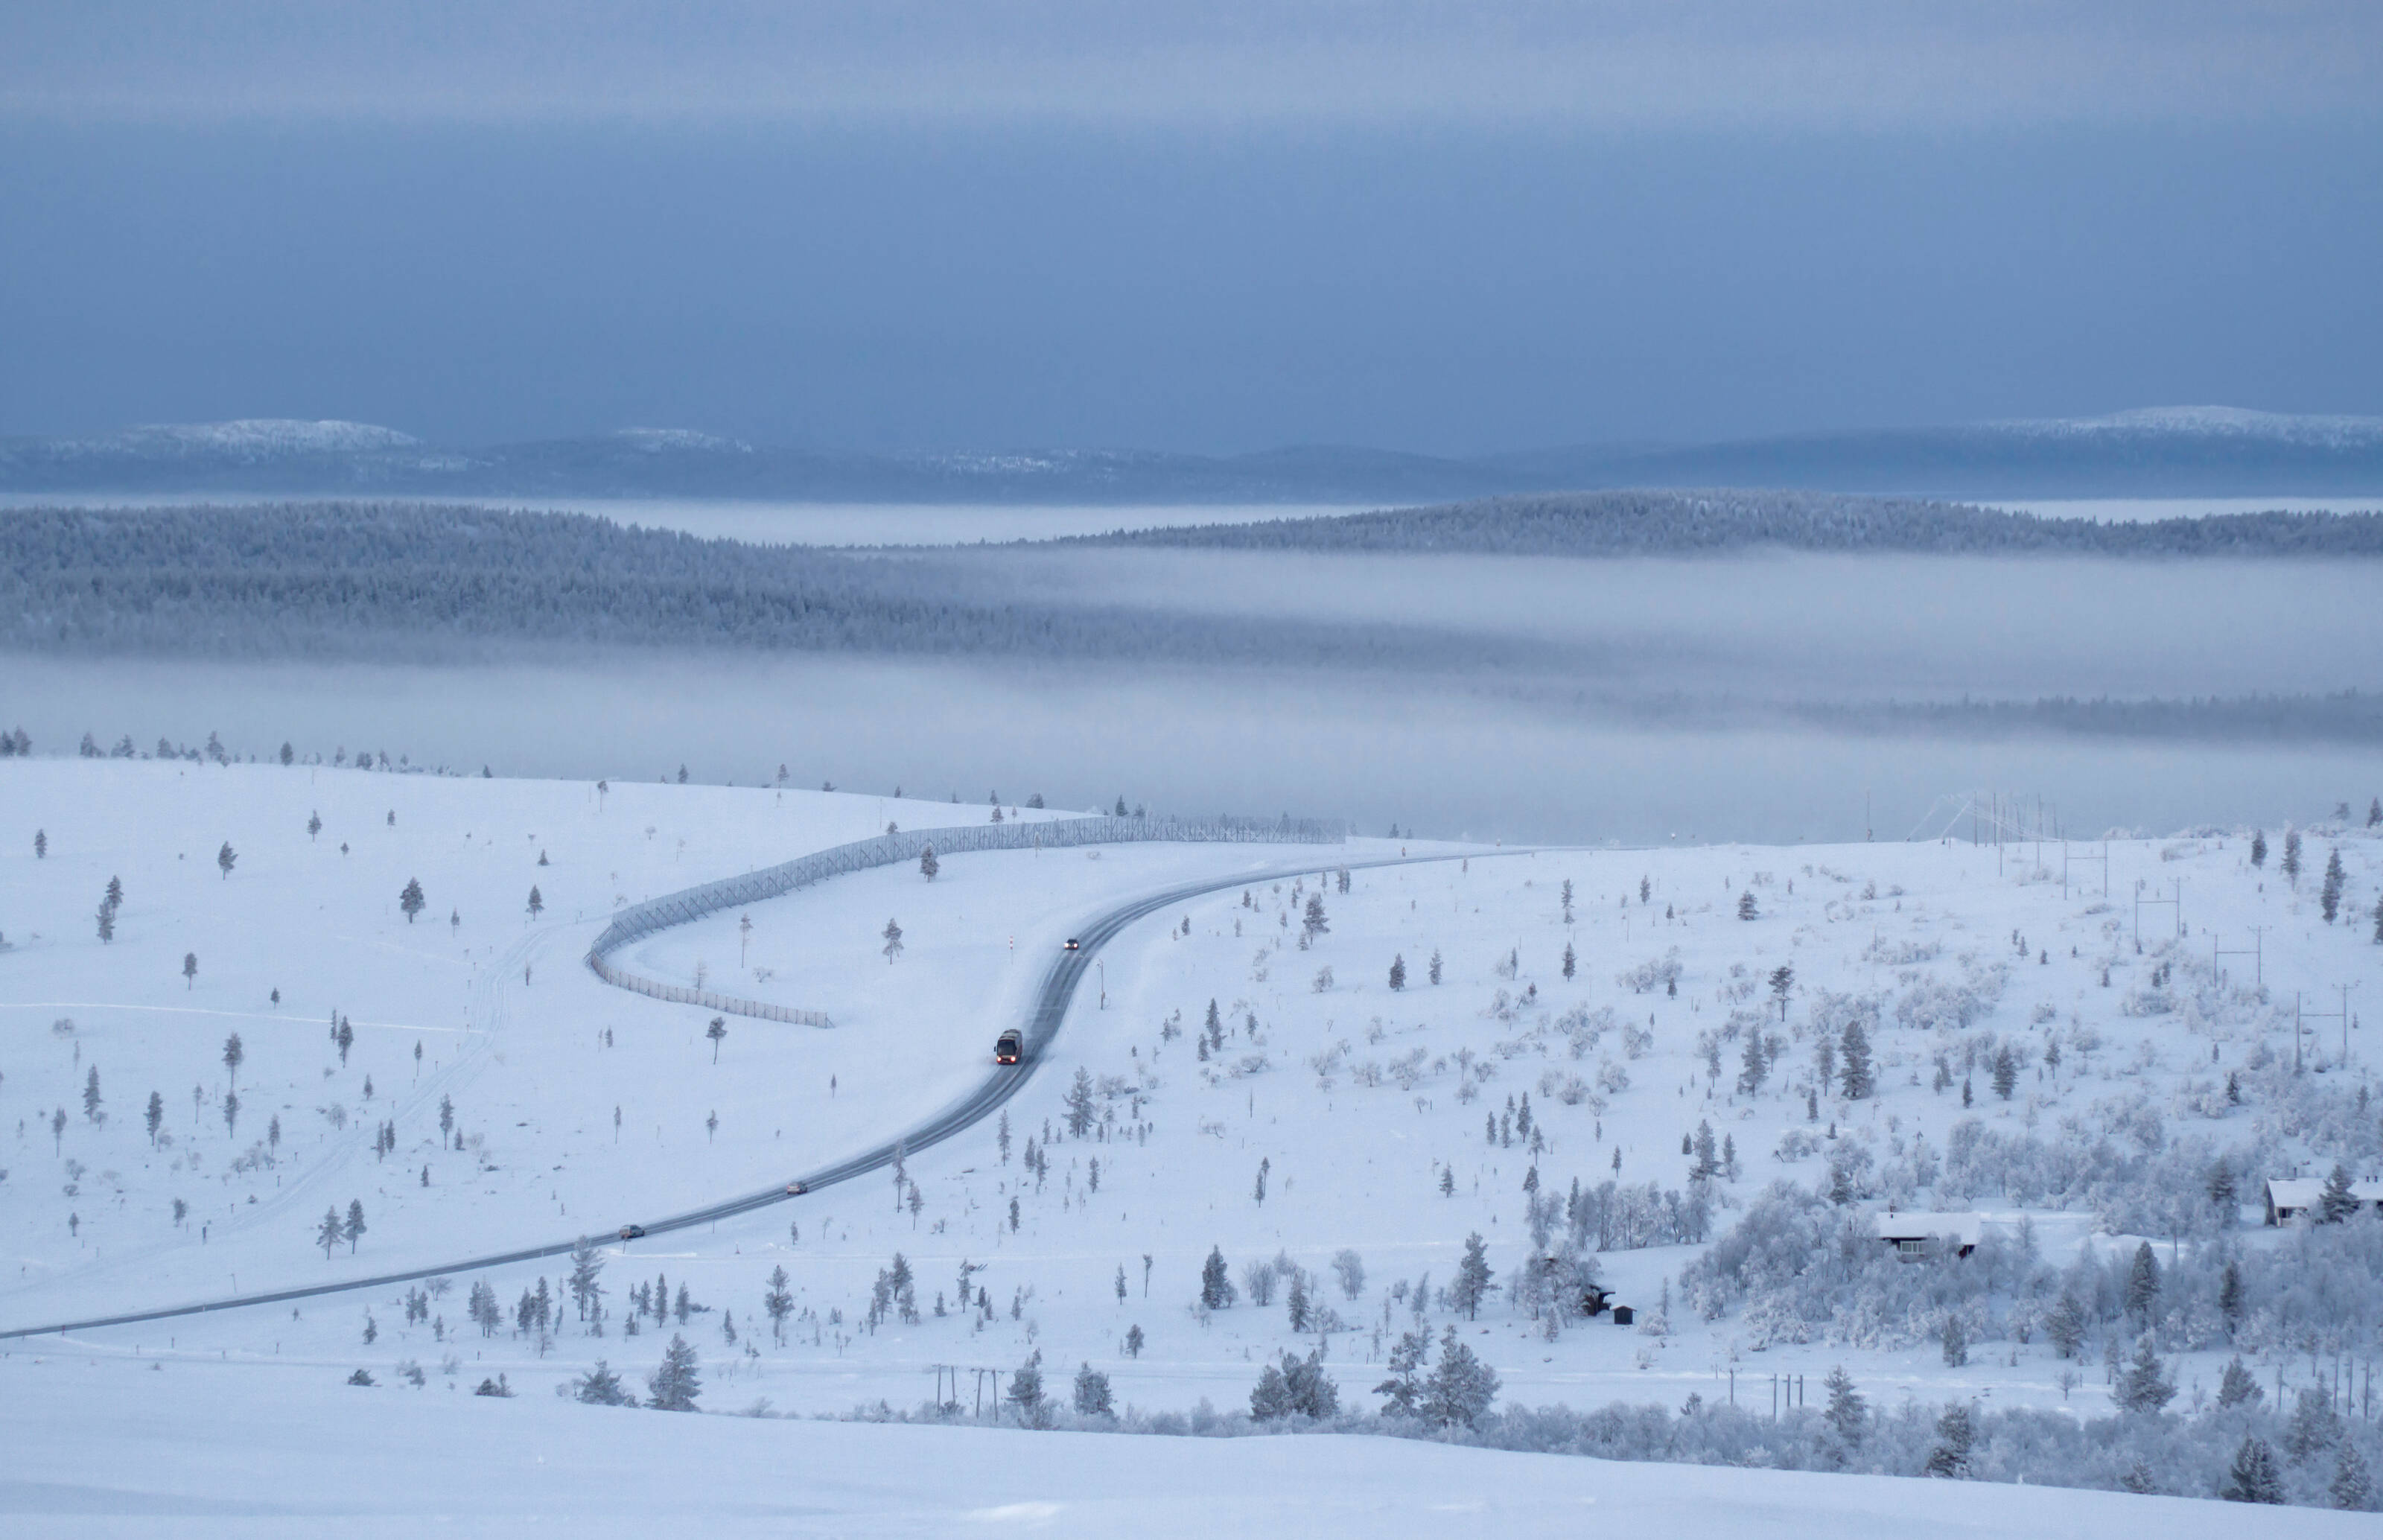 a landscape picture of a snowy Lapland where a road crosses the landscape